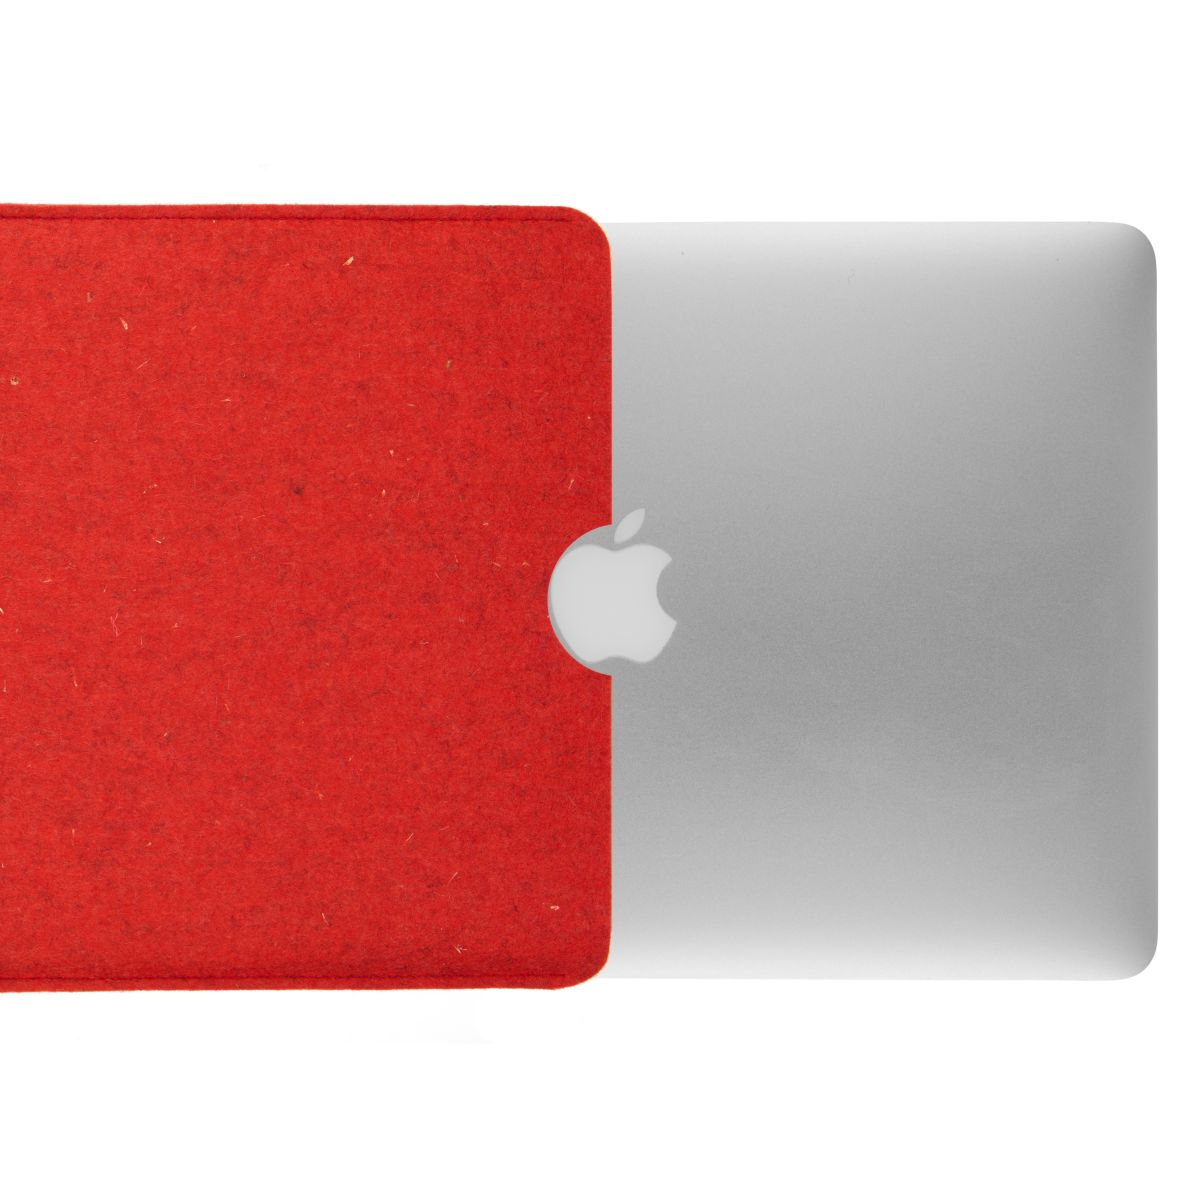 COVERKINGZ Laptop Bag für Rot Apple Sleeve Laptop Tasche Filz Schurwolle), (100